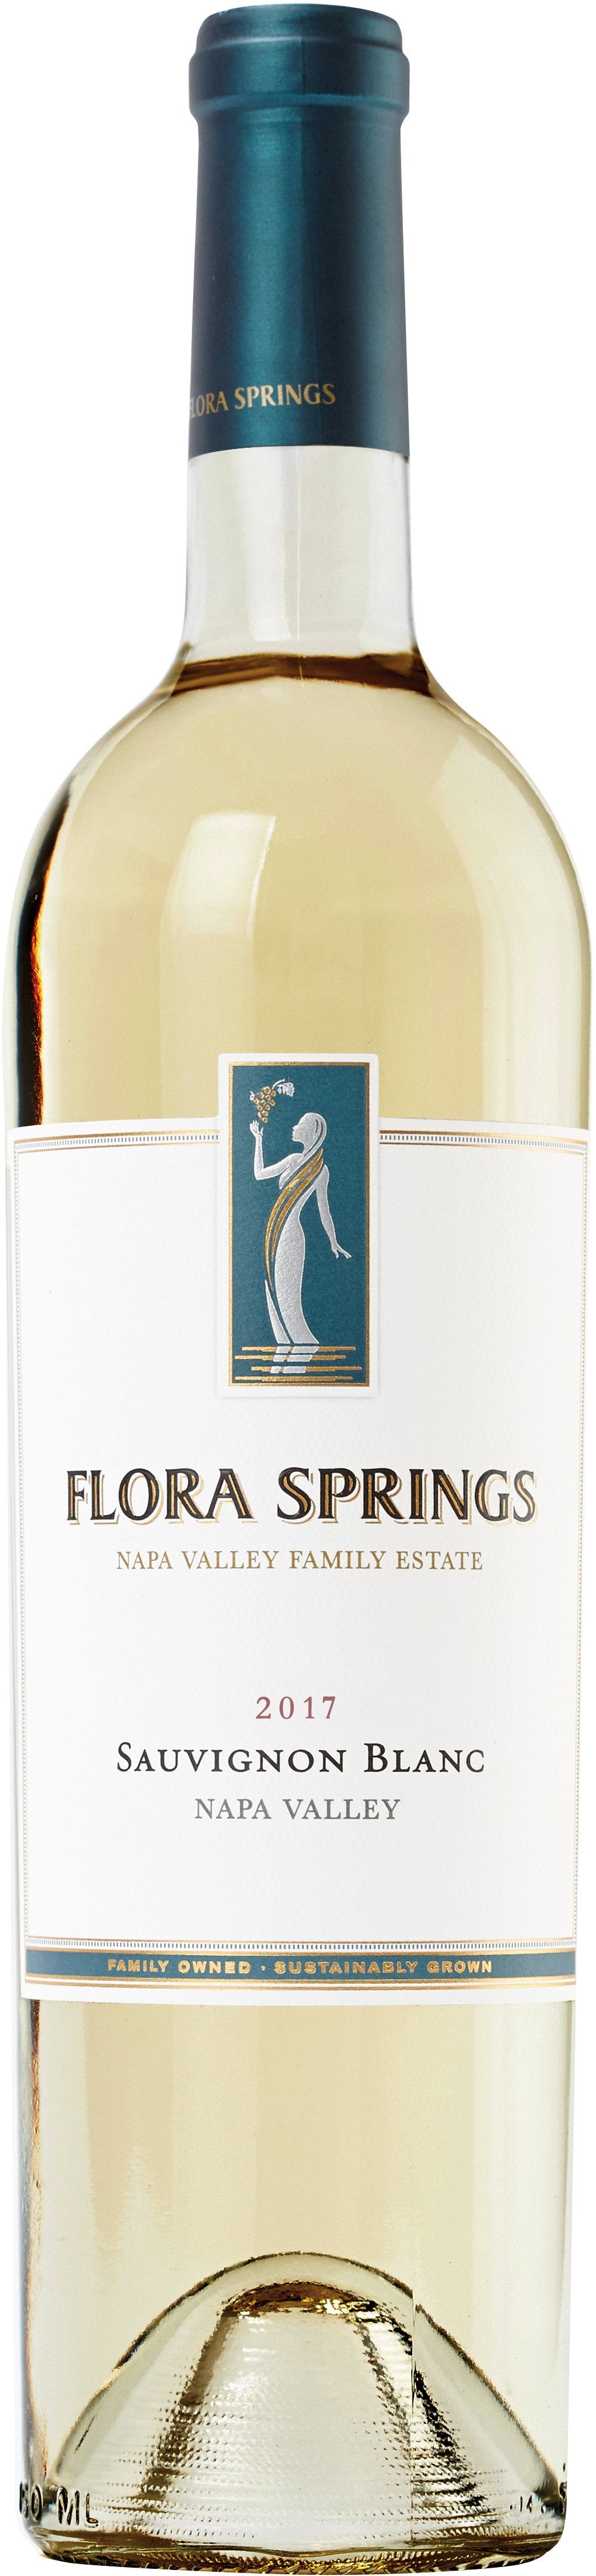 Flora Springs Sauvignon Blanc 2017